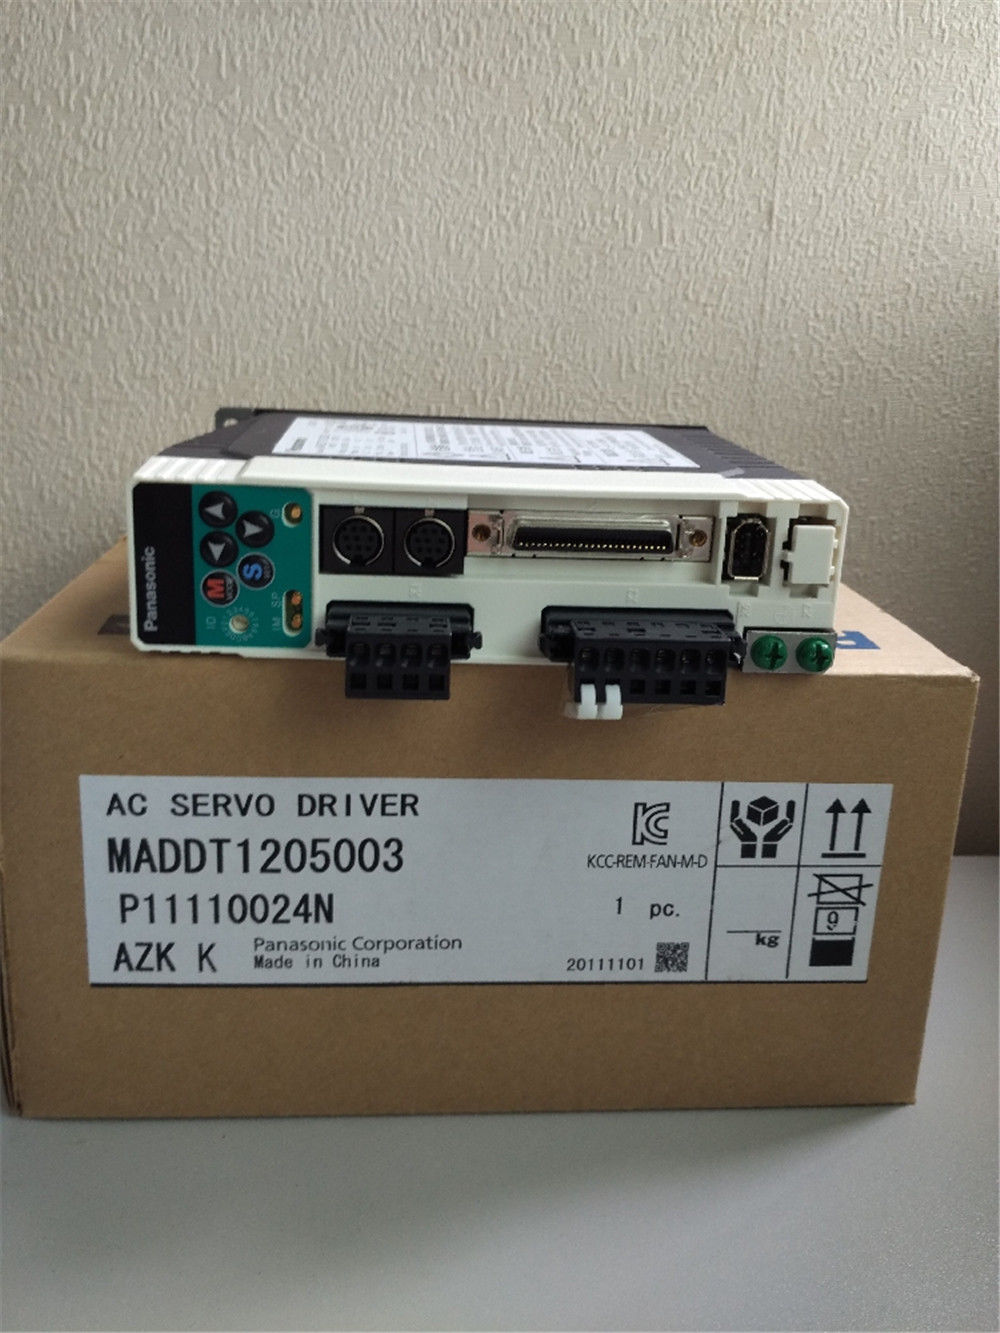 NEW Panasonic MADDT1205003 100W 200-240V servo controller in box